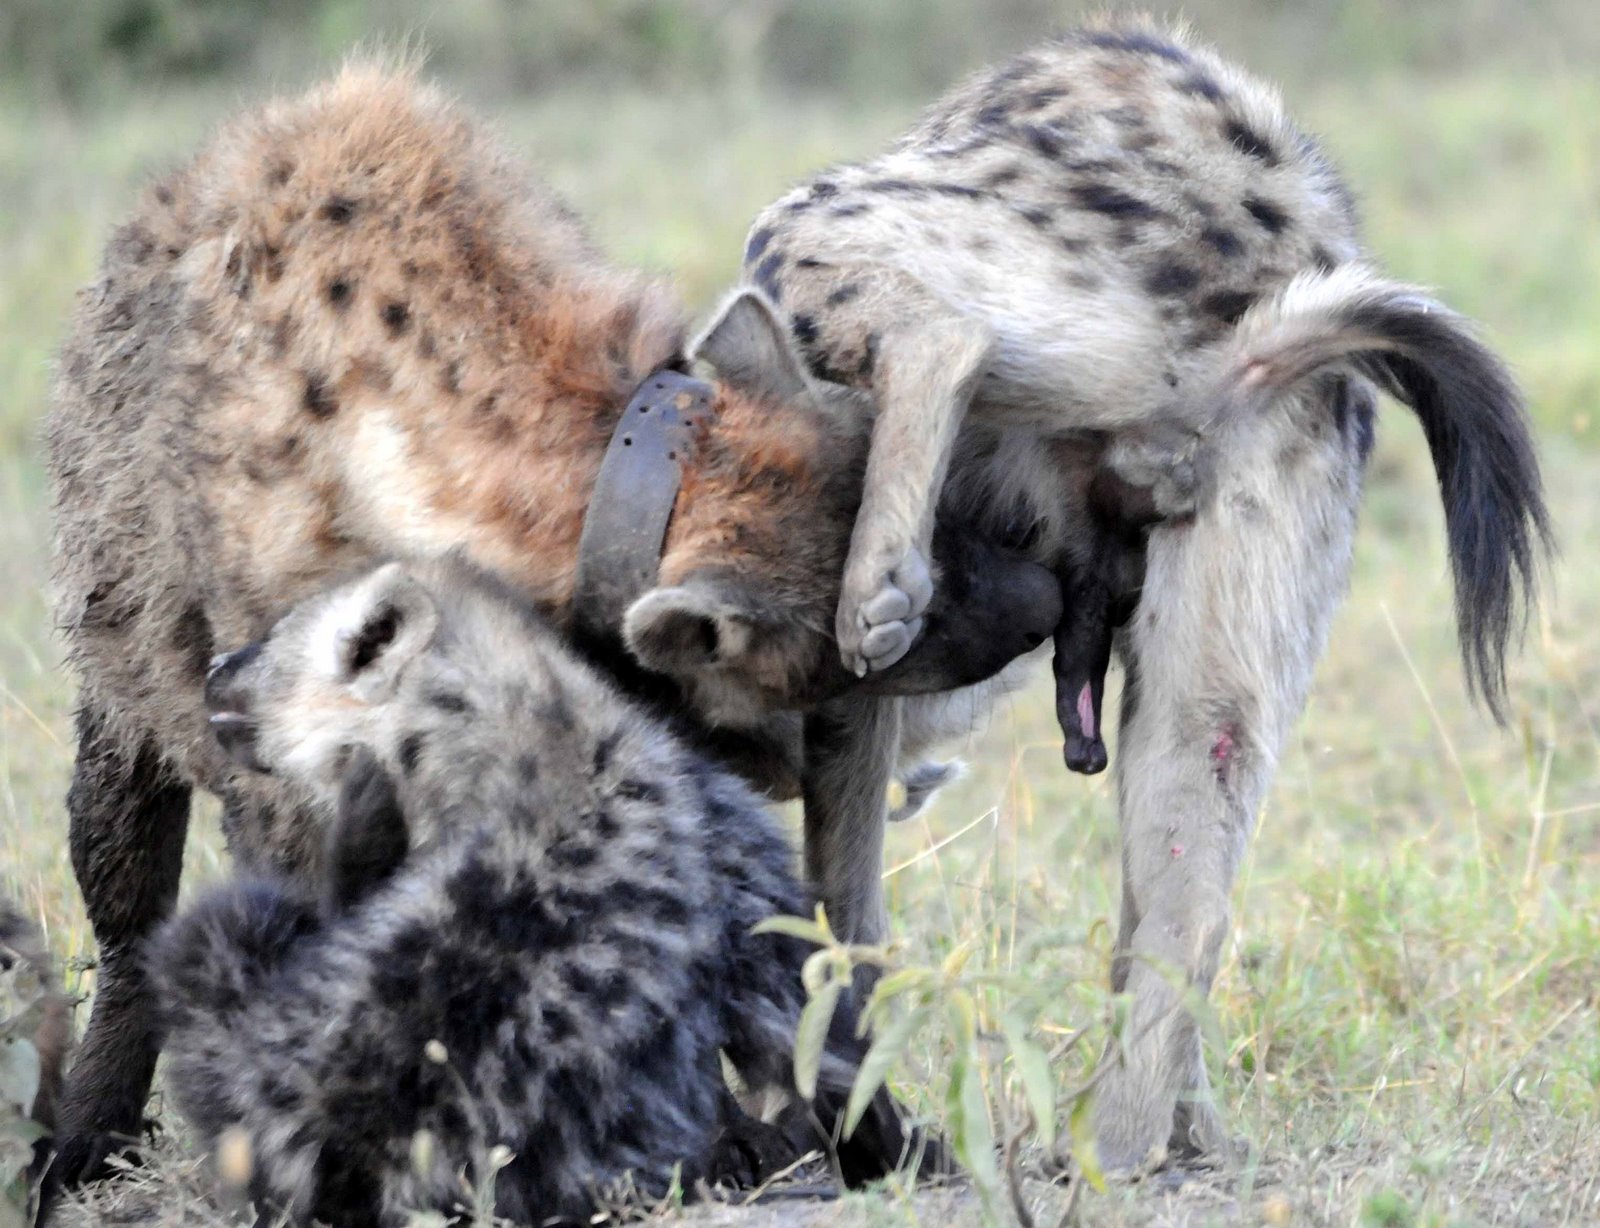 Marmot minutes: News Story on Hyenas Greeting their 